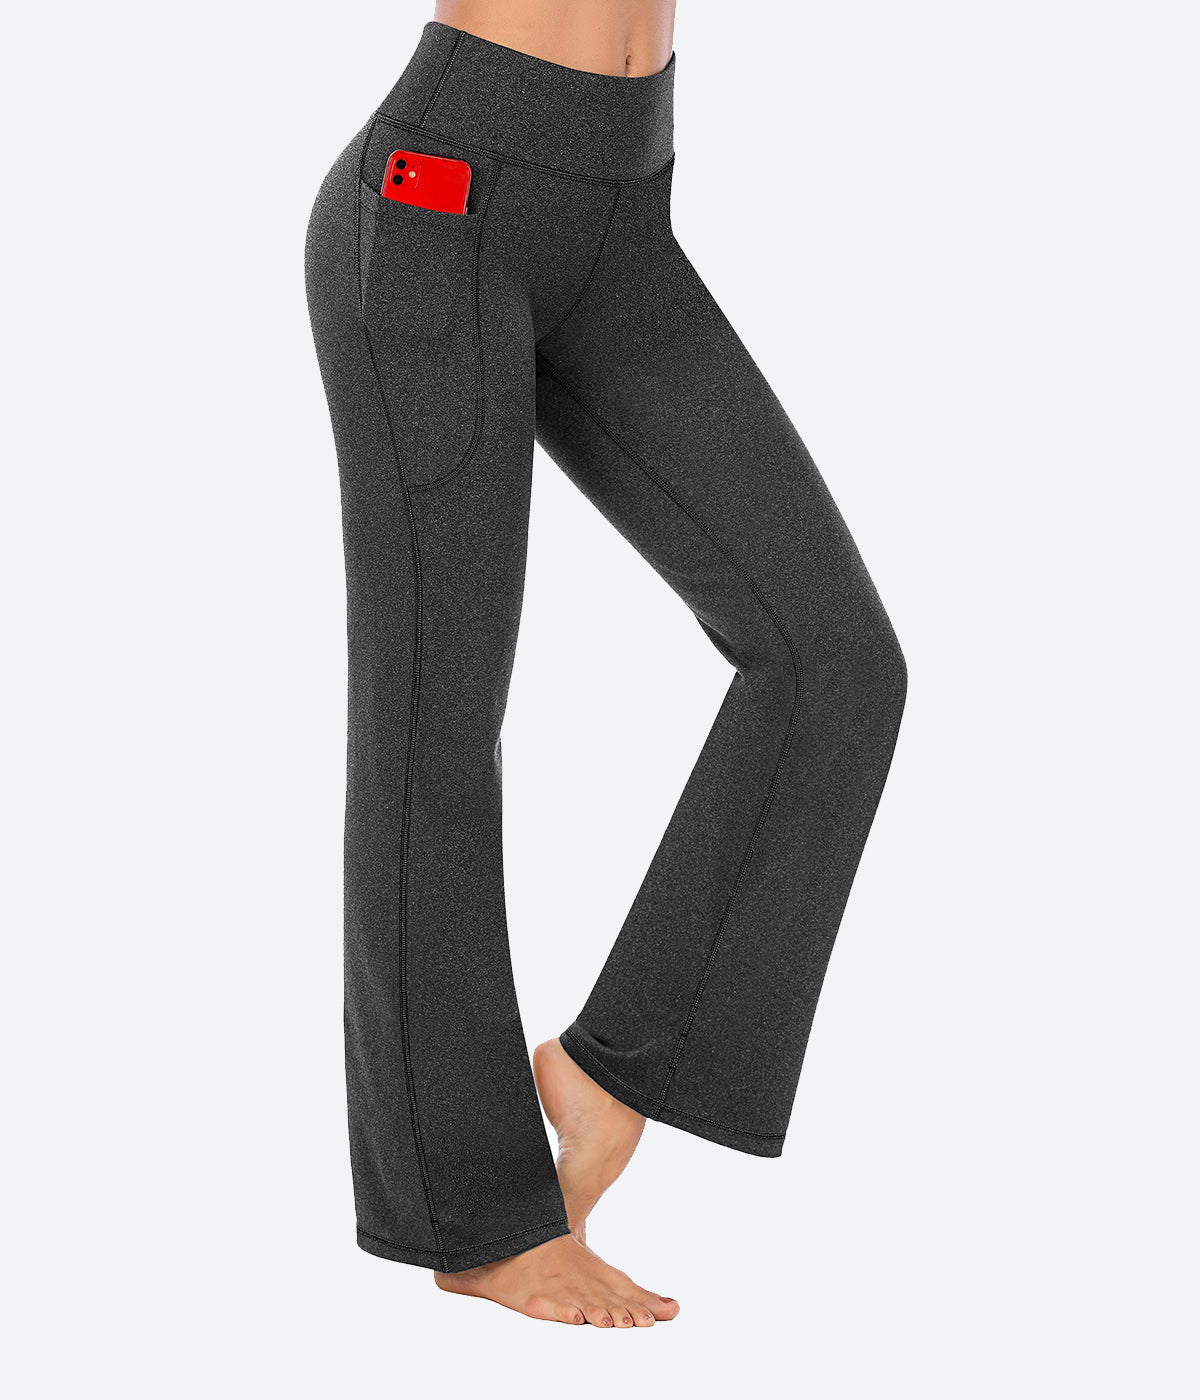  Heathyoga Women's Capris Bootcut Yoga Pants with